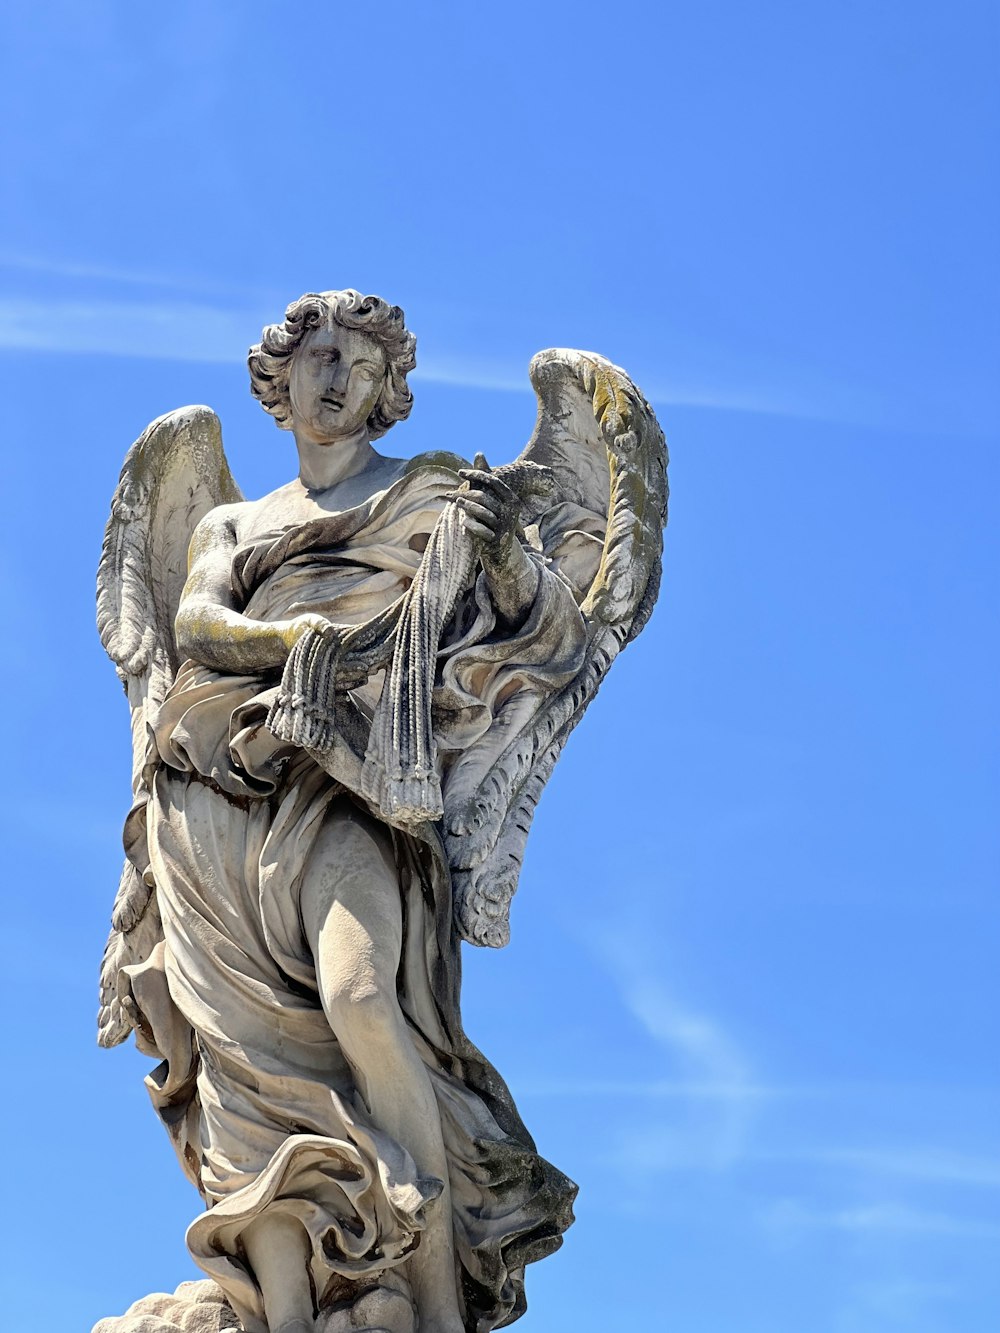 a statue of an angel holding a cross